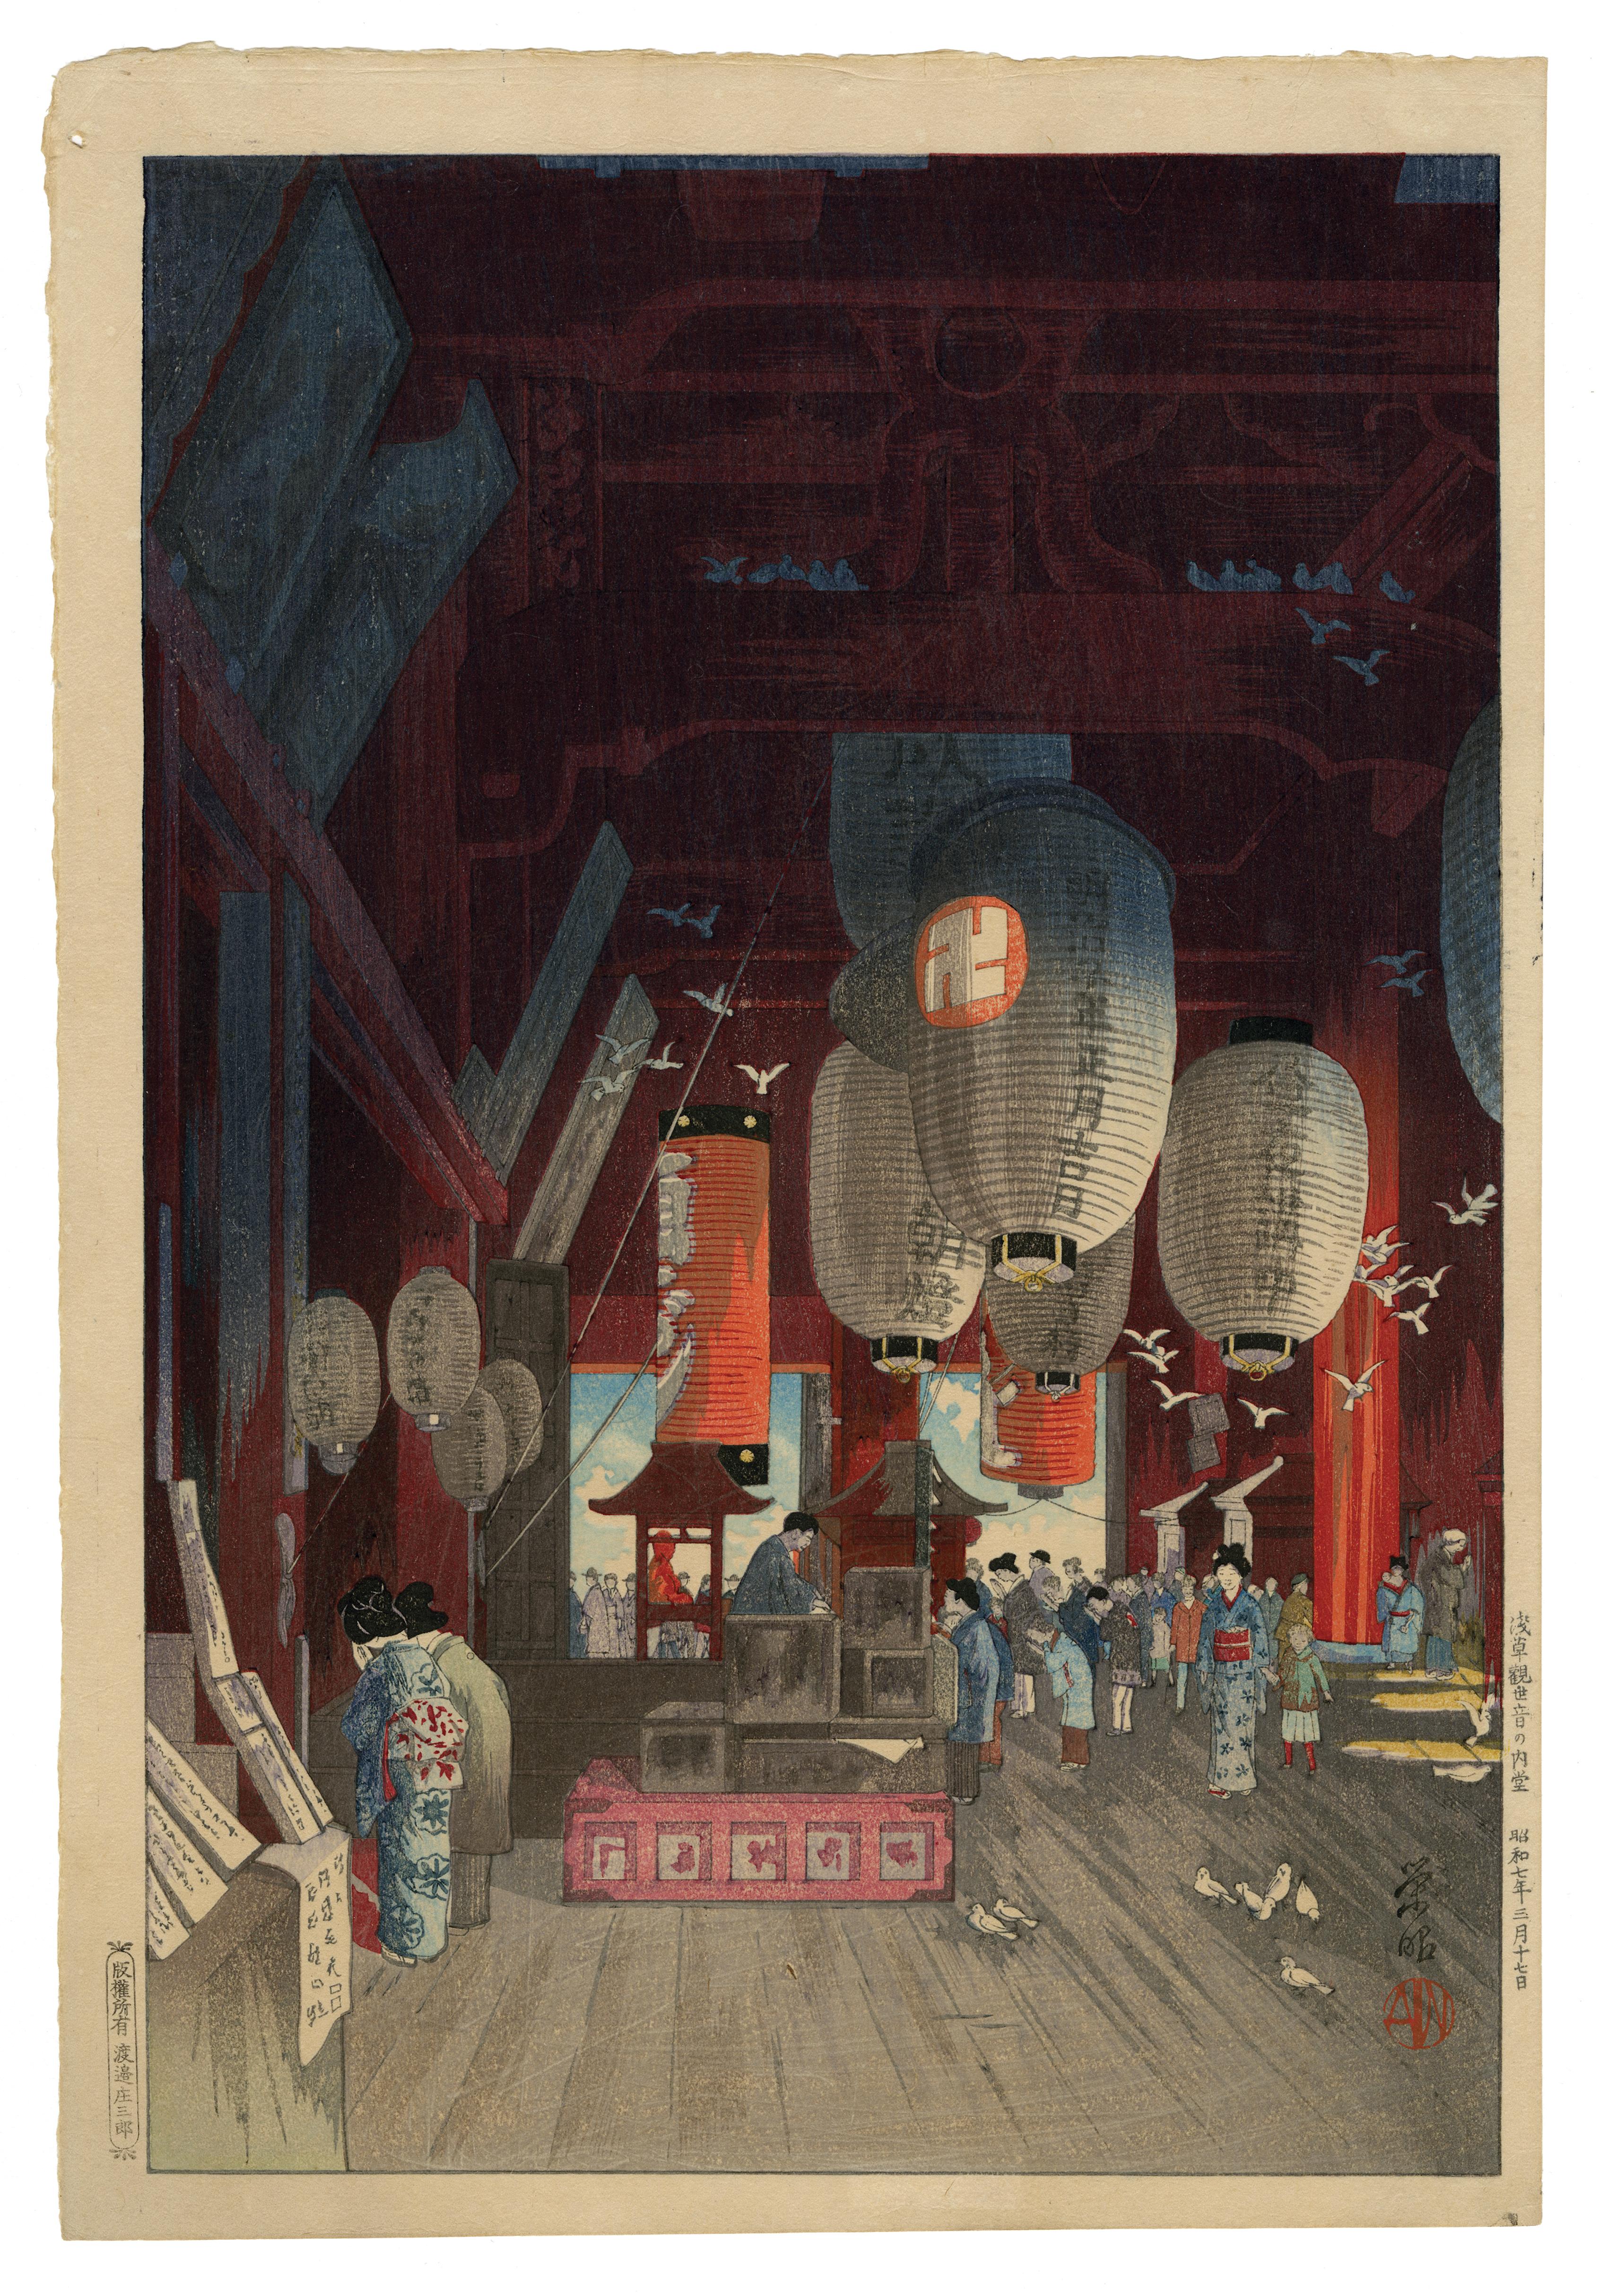 NARAZAKI EISHO Interior Print - 'Interior of the Kannon Temple at Asakusa' — Early Edition 1930s Woodblock Print